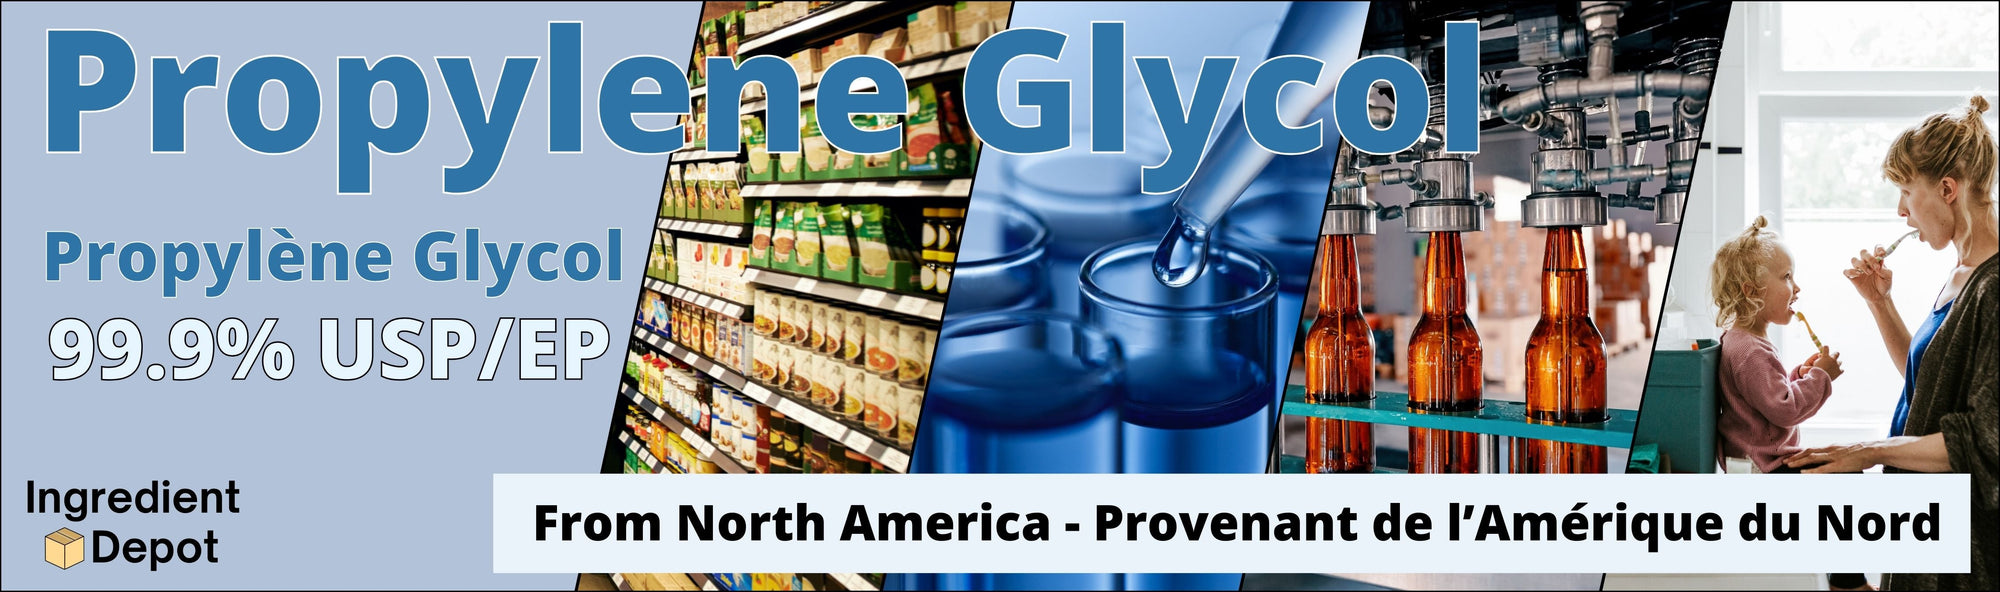 Ingredient Depot Propylene Glycol 99.9 USP Grade